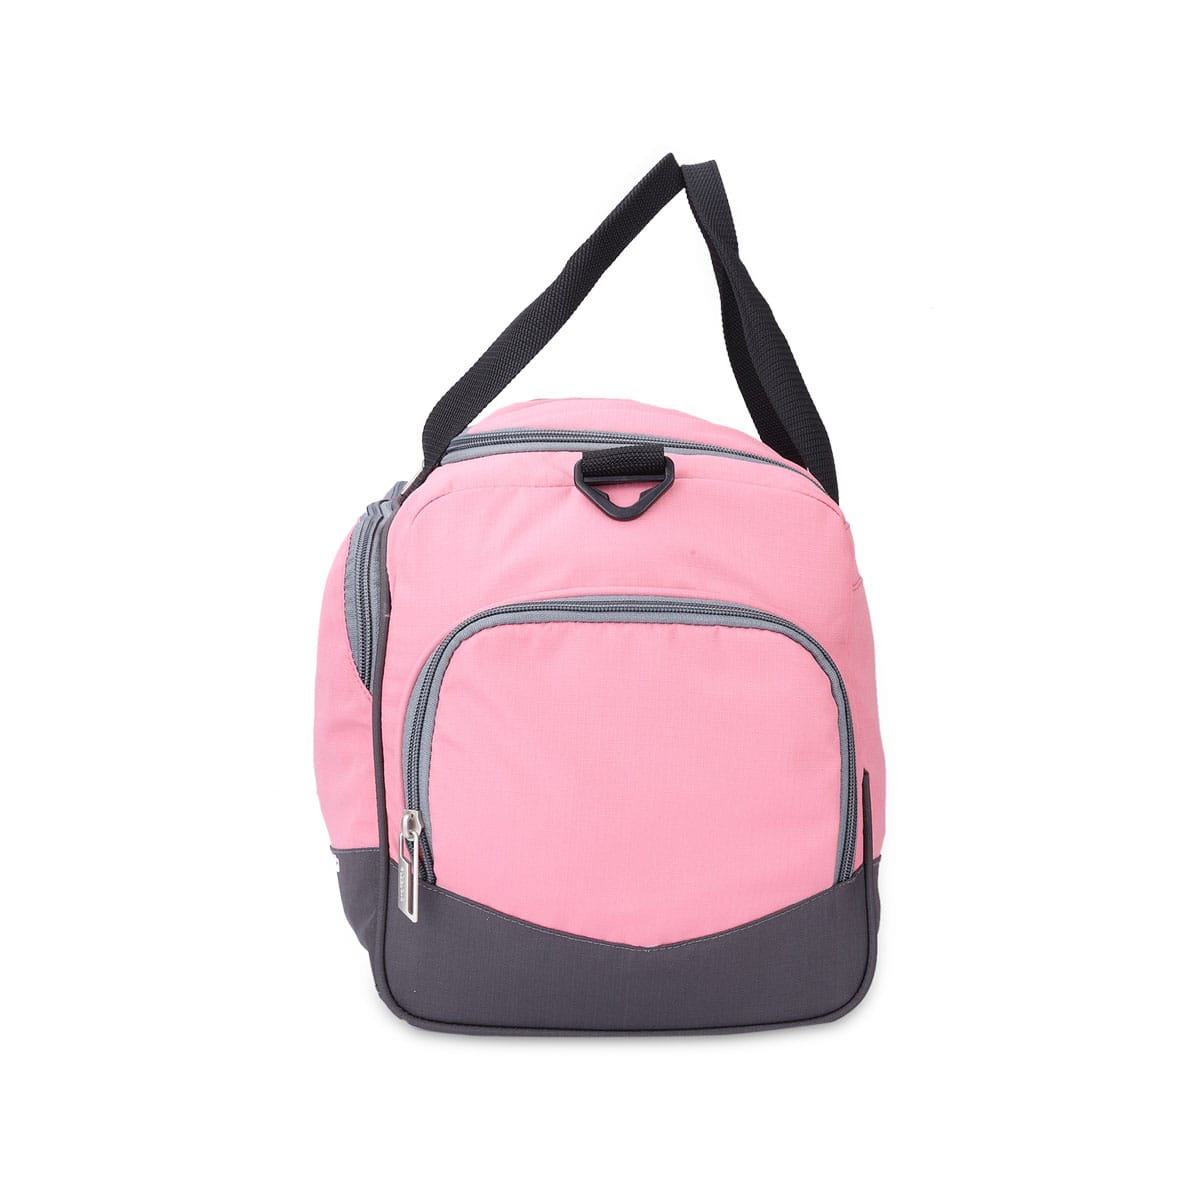 Grey-Pink | Protecta Rep Gym Bag-1